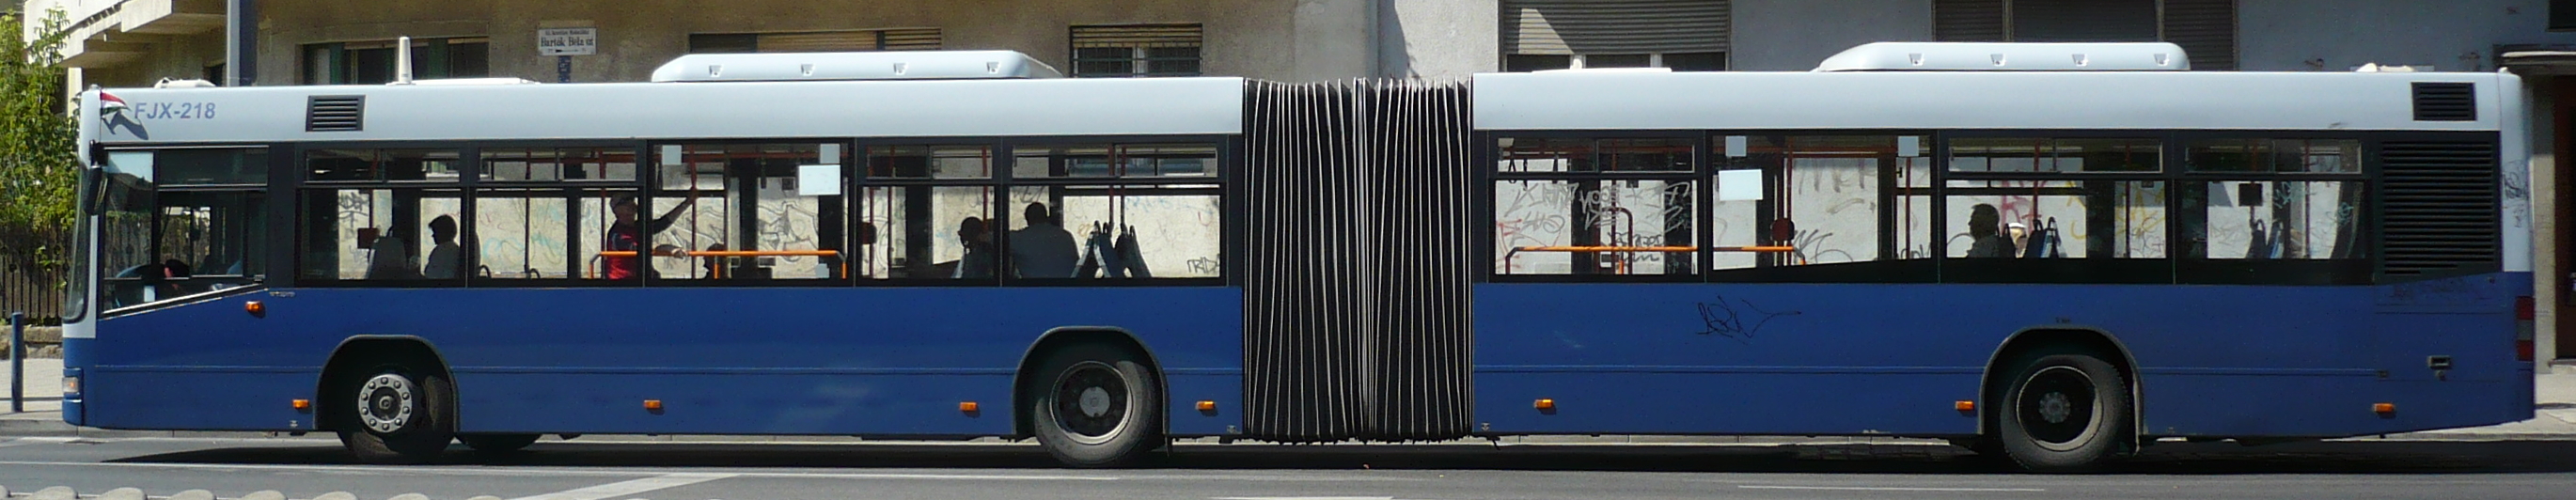 File:Volvo 7700 bus side-view.jpg